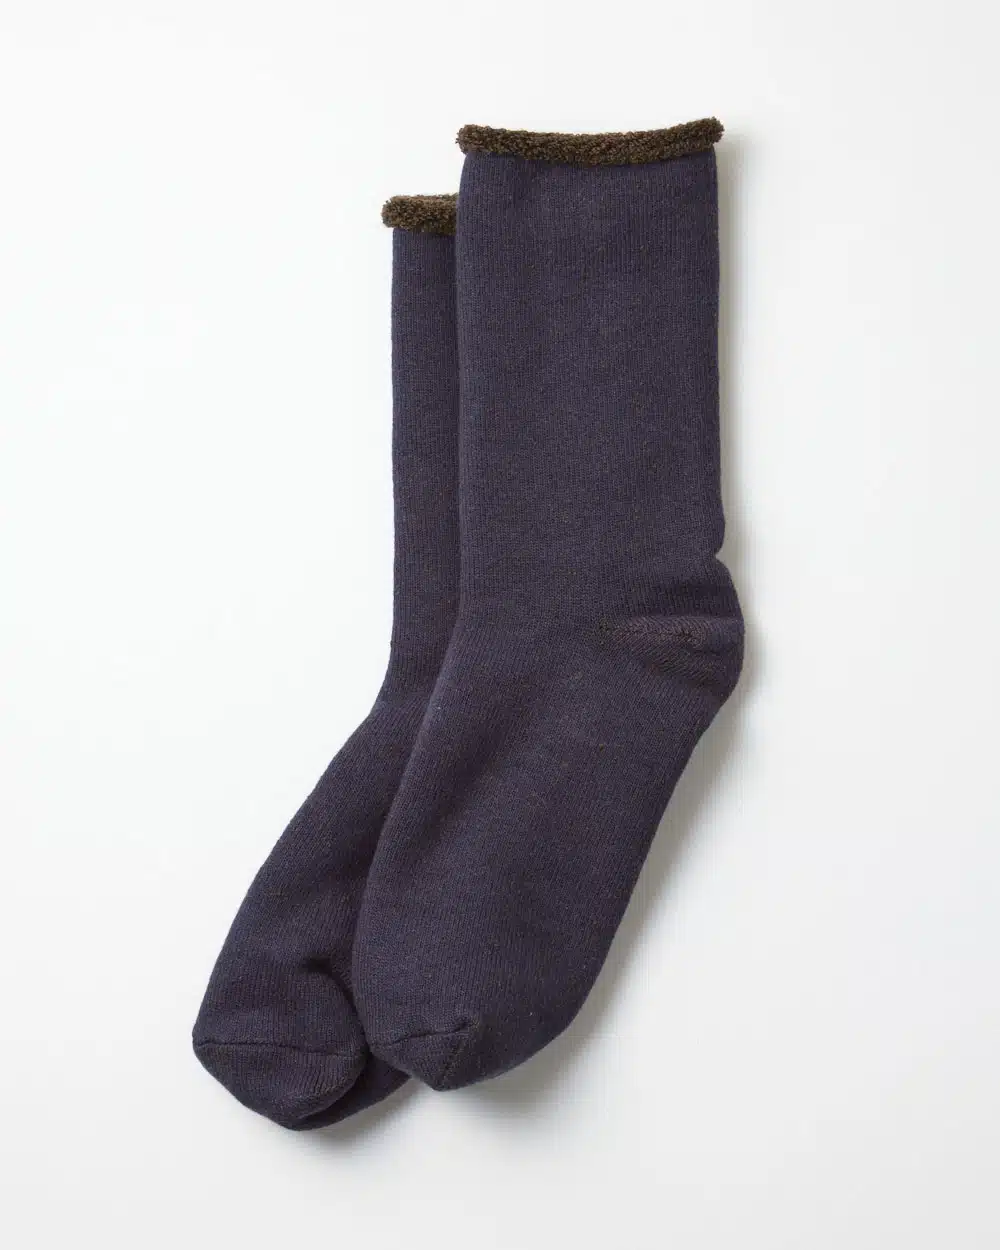 Double Face Cozy Sleeping Socks "Extra Fine Merino" - Navy/Brown